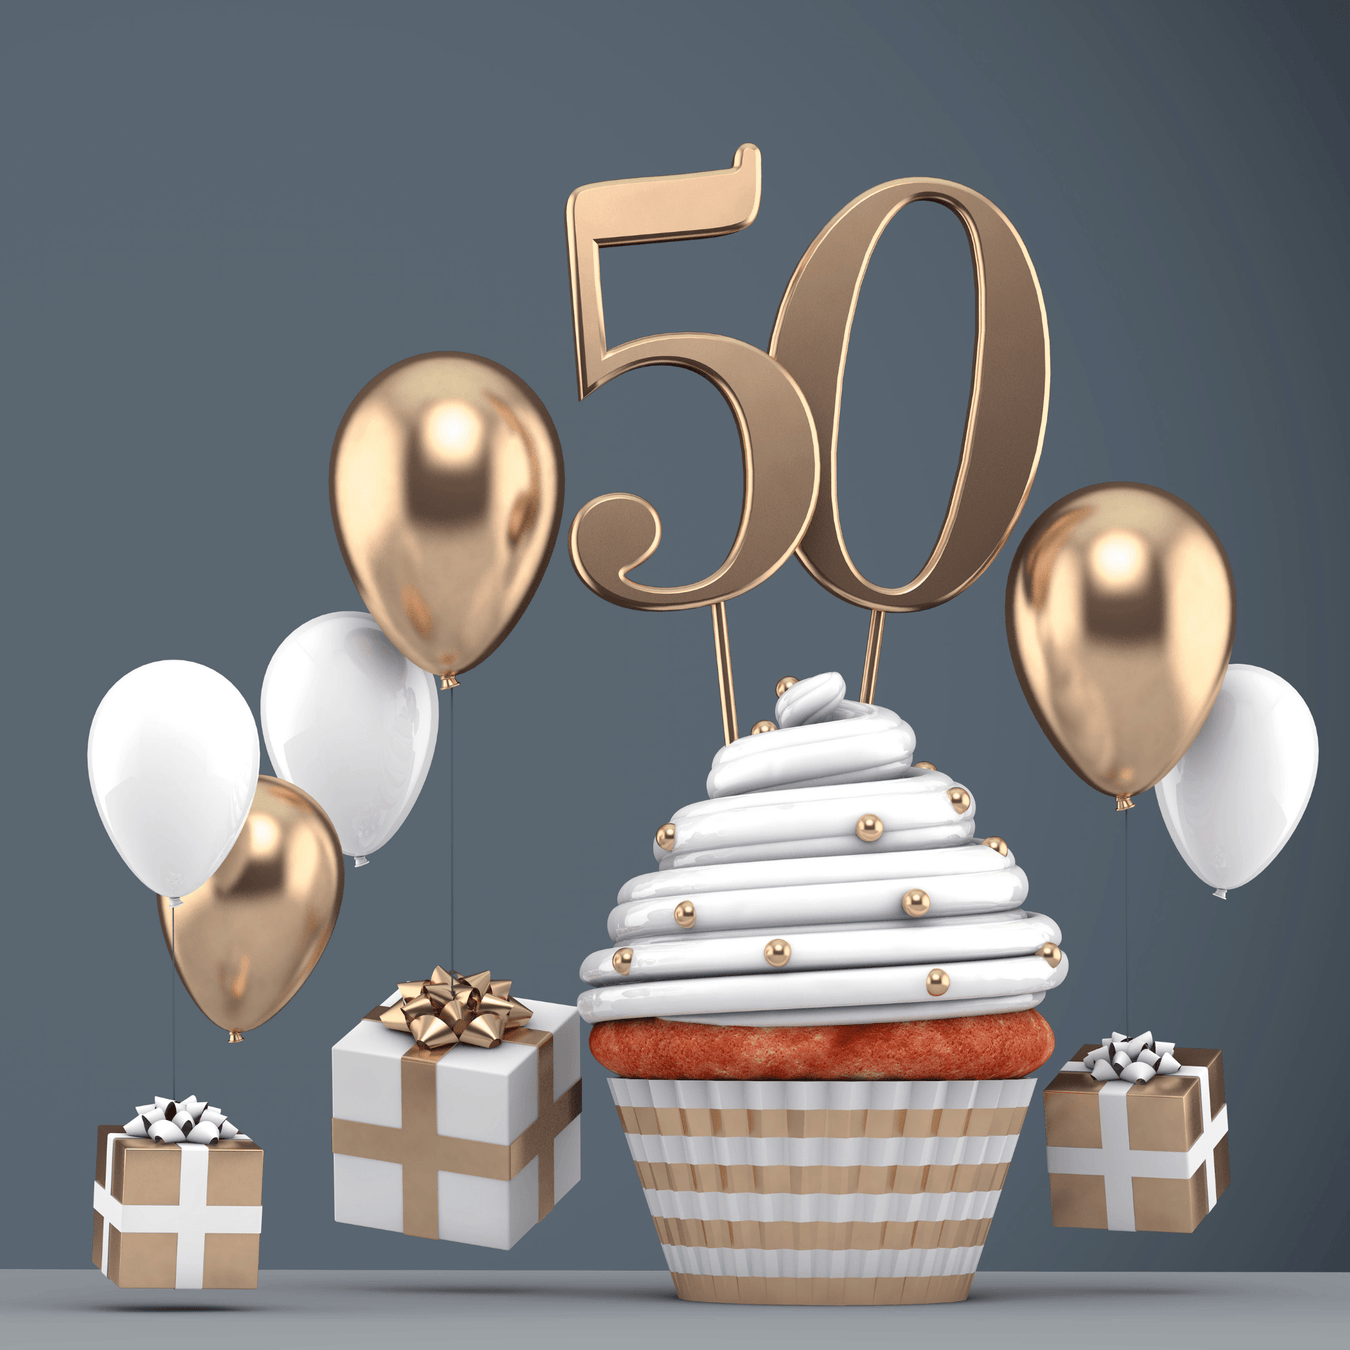 50th Birthday Gifts & Present Ideas